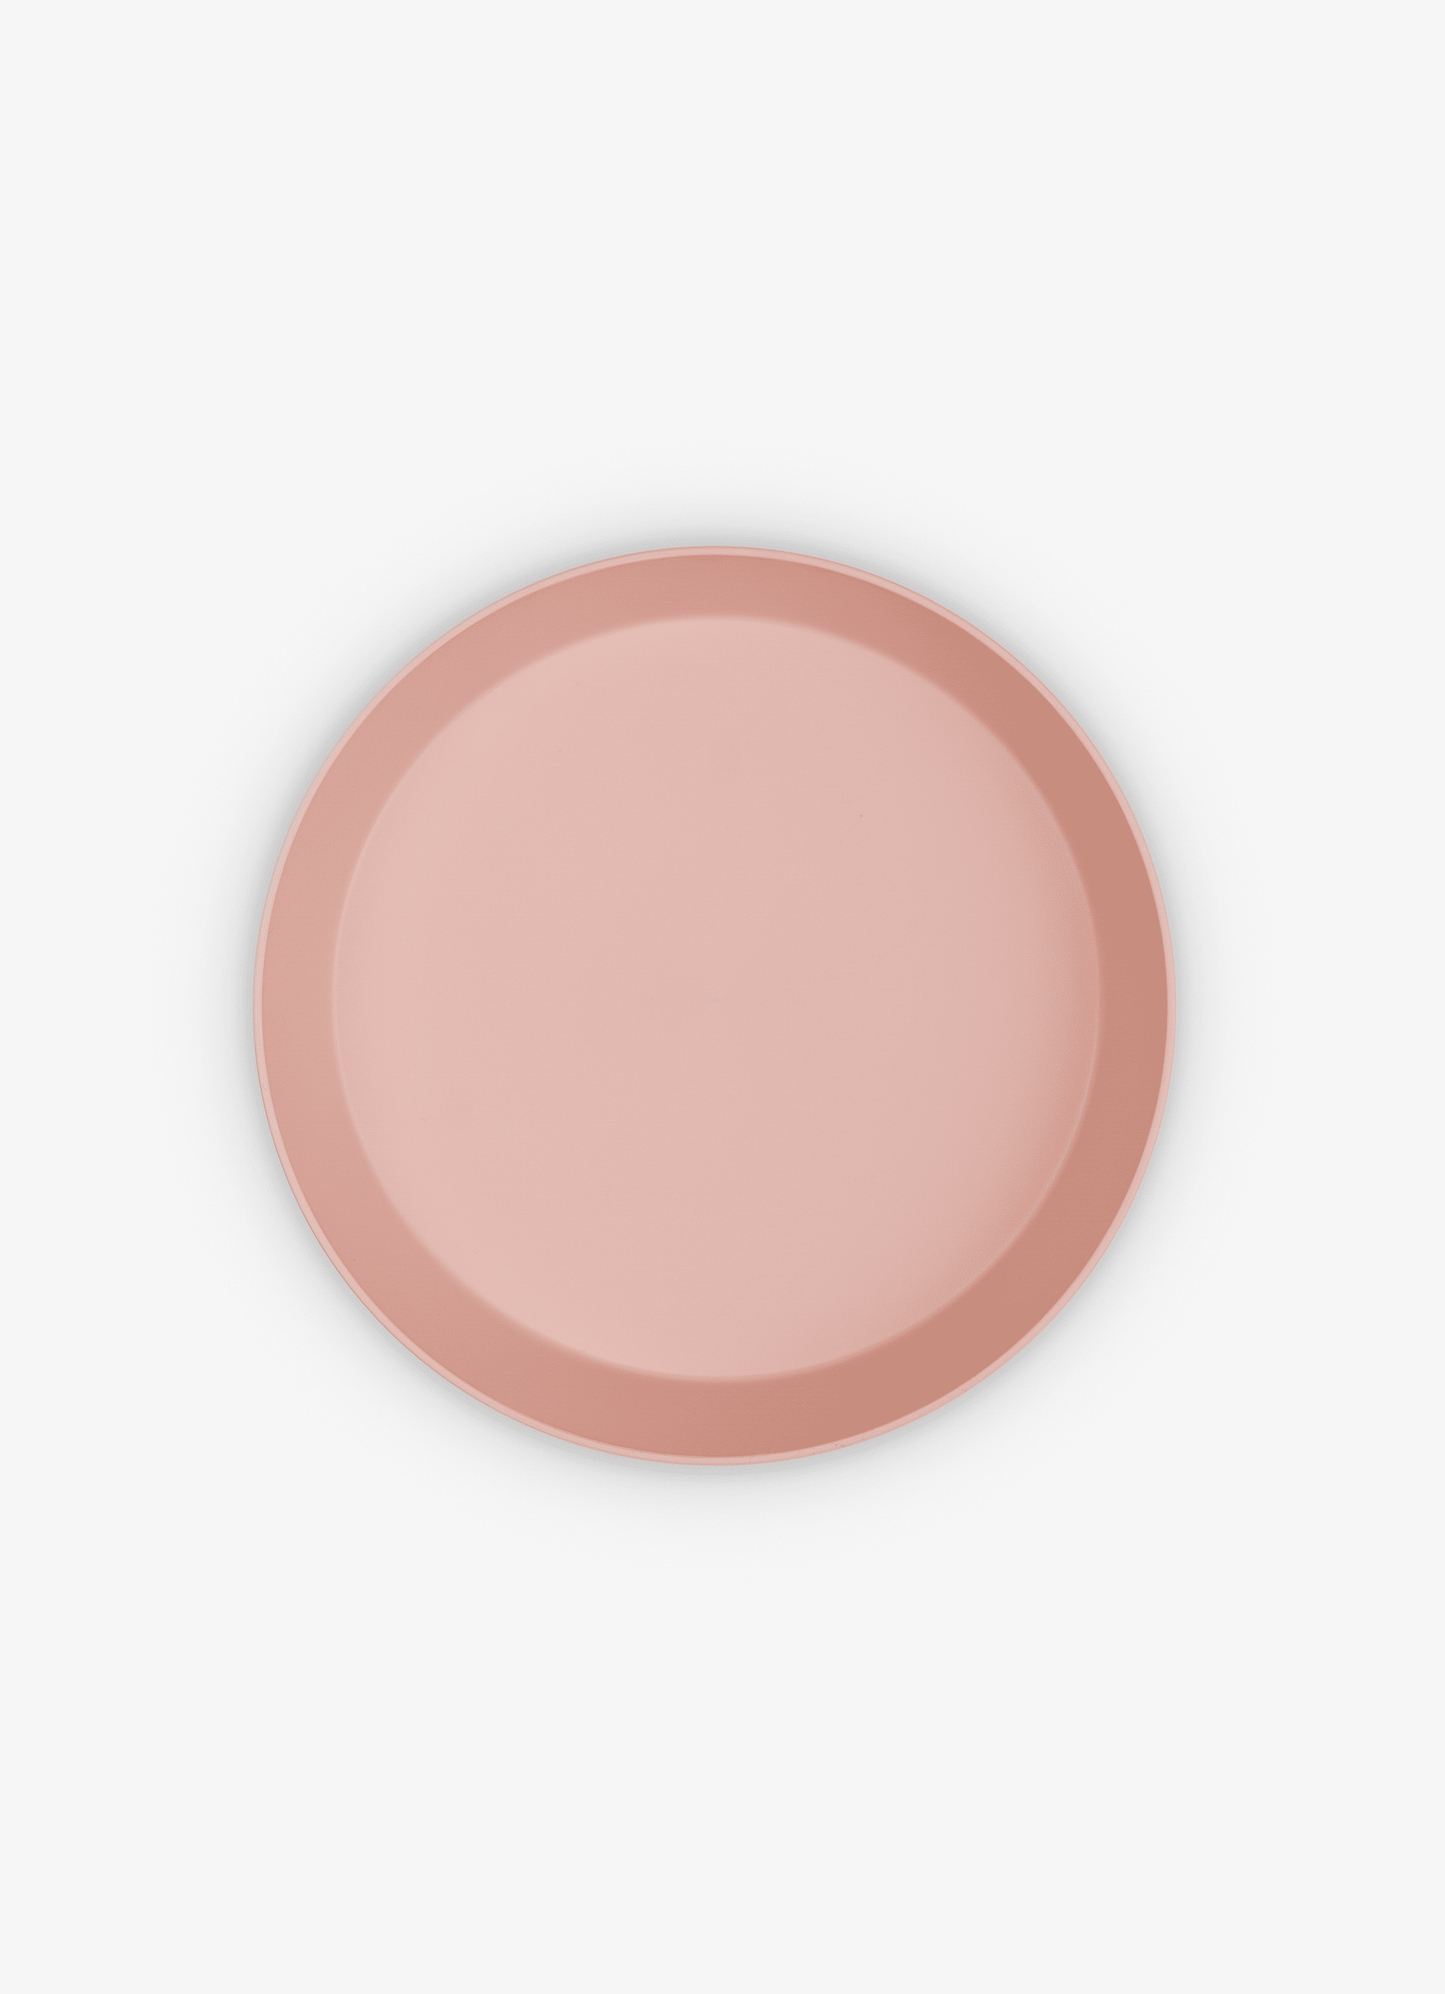 Bio Based Plates - Set of 4 - Pink/ Cream